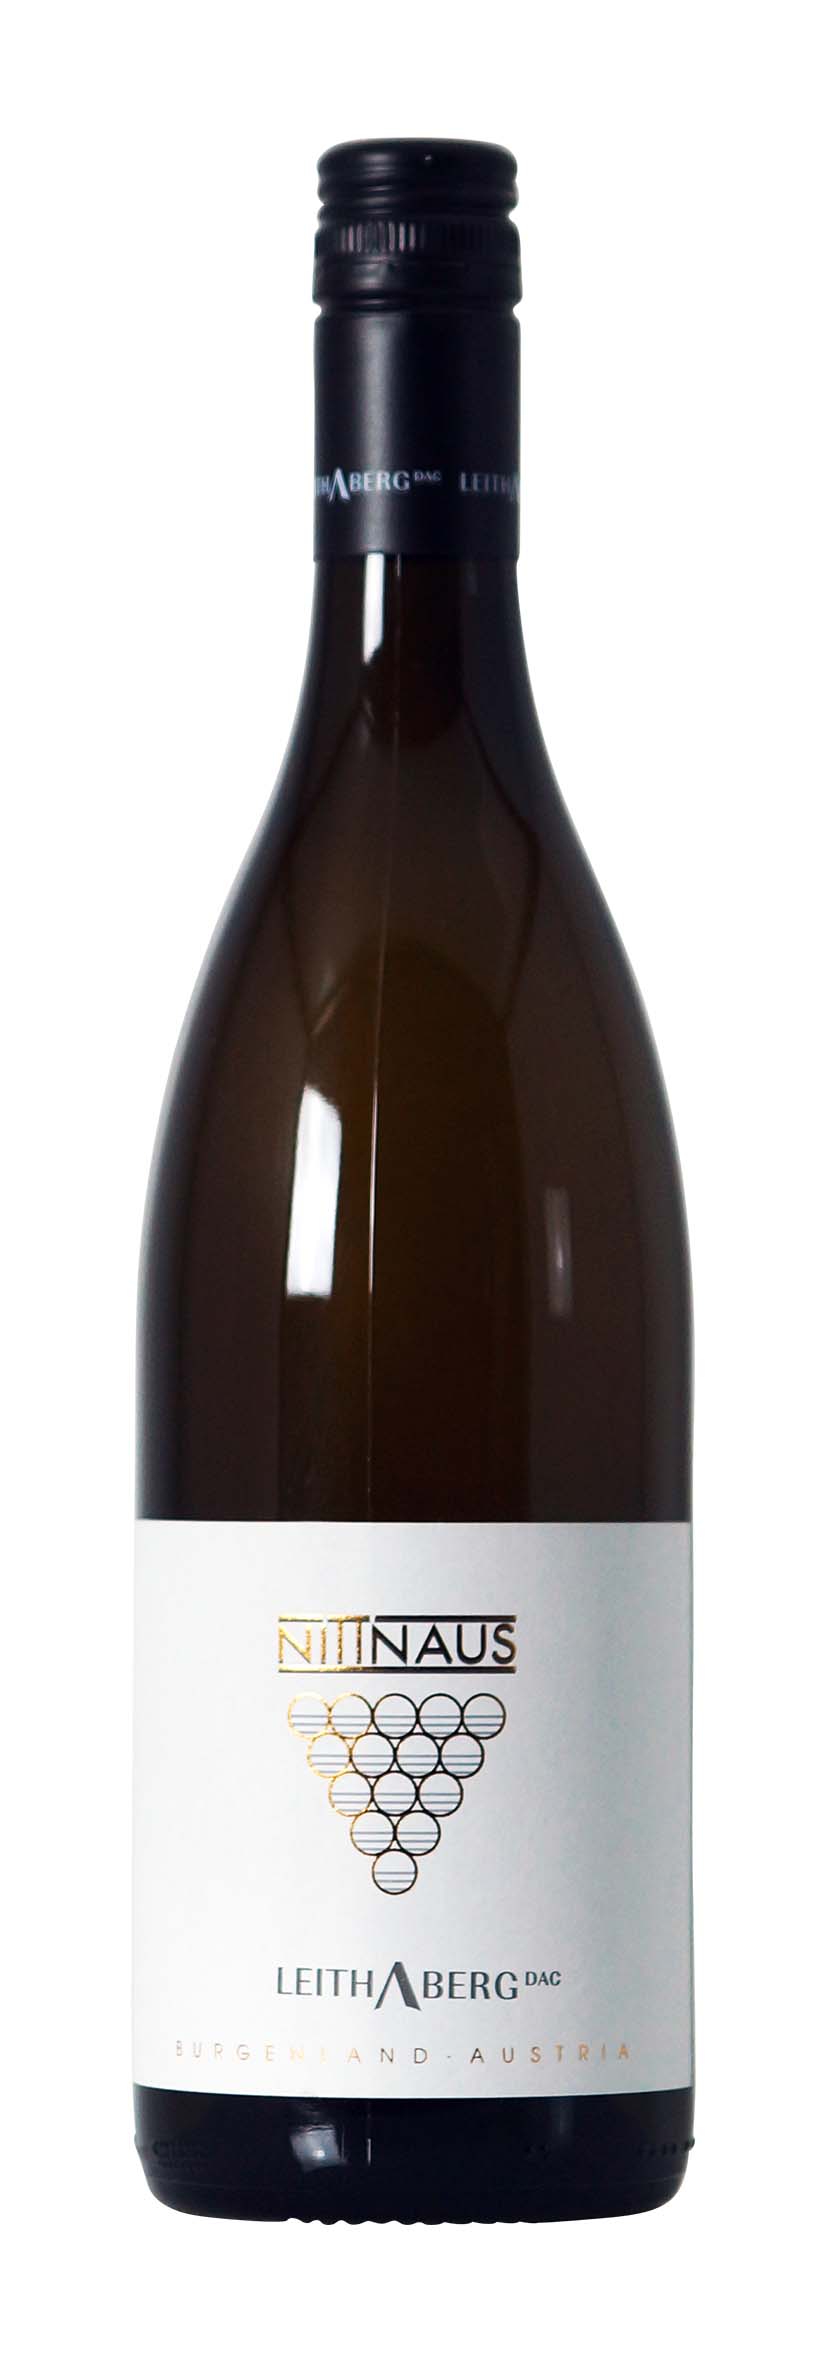 Leithaberg DAC Chardonnay Pinot Blanc 2012